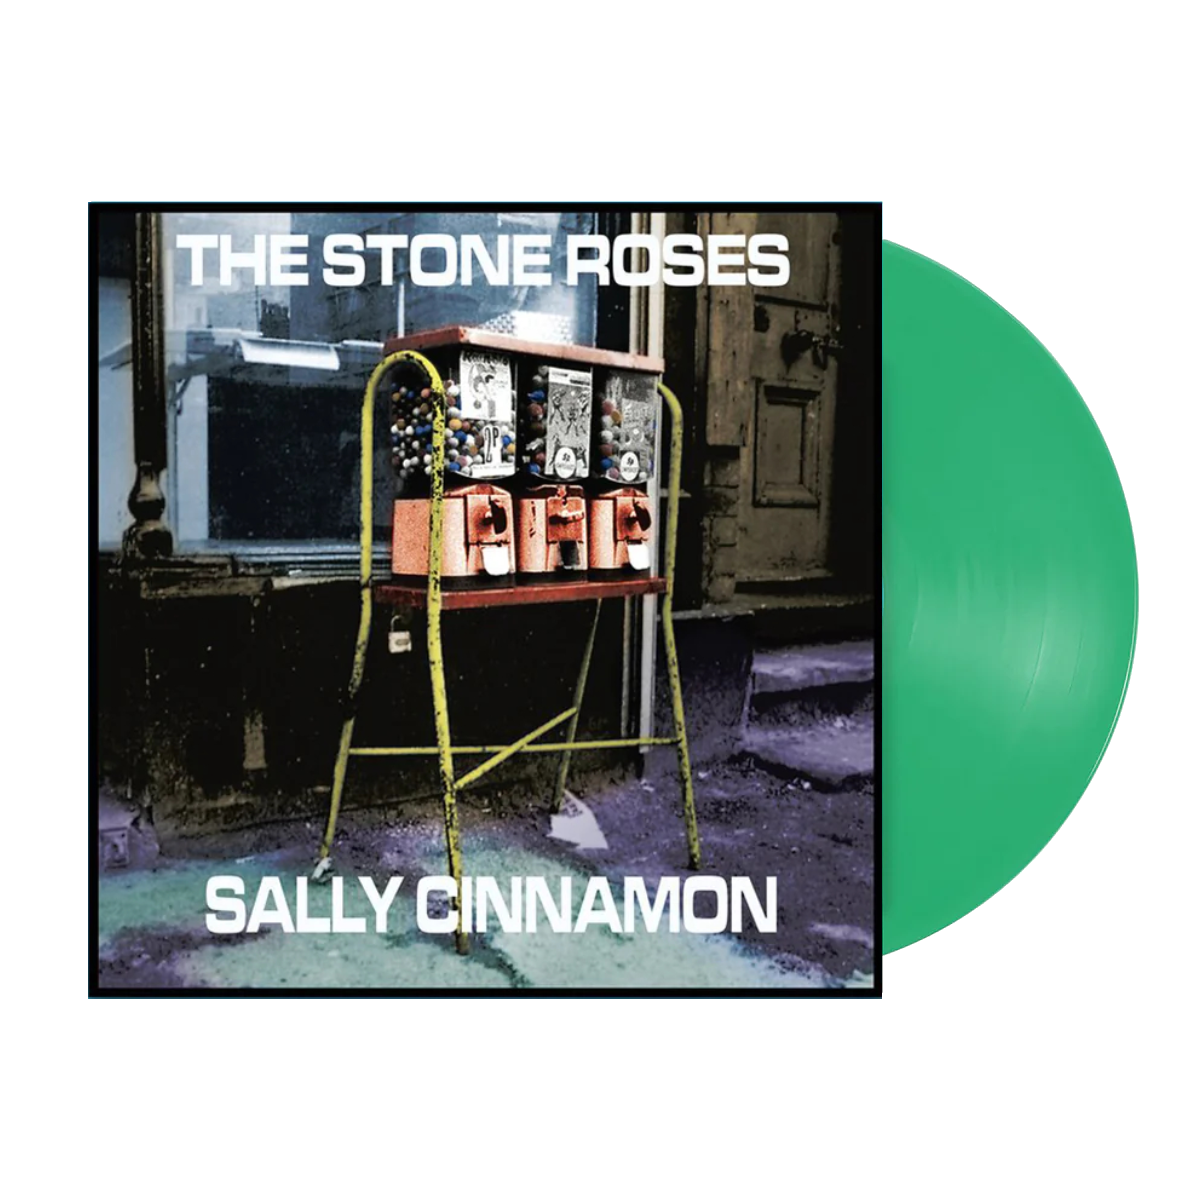 The Stone Roses - Sally Cinnamon: Limited 180g Green Vinyl LP